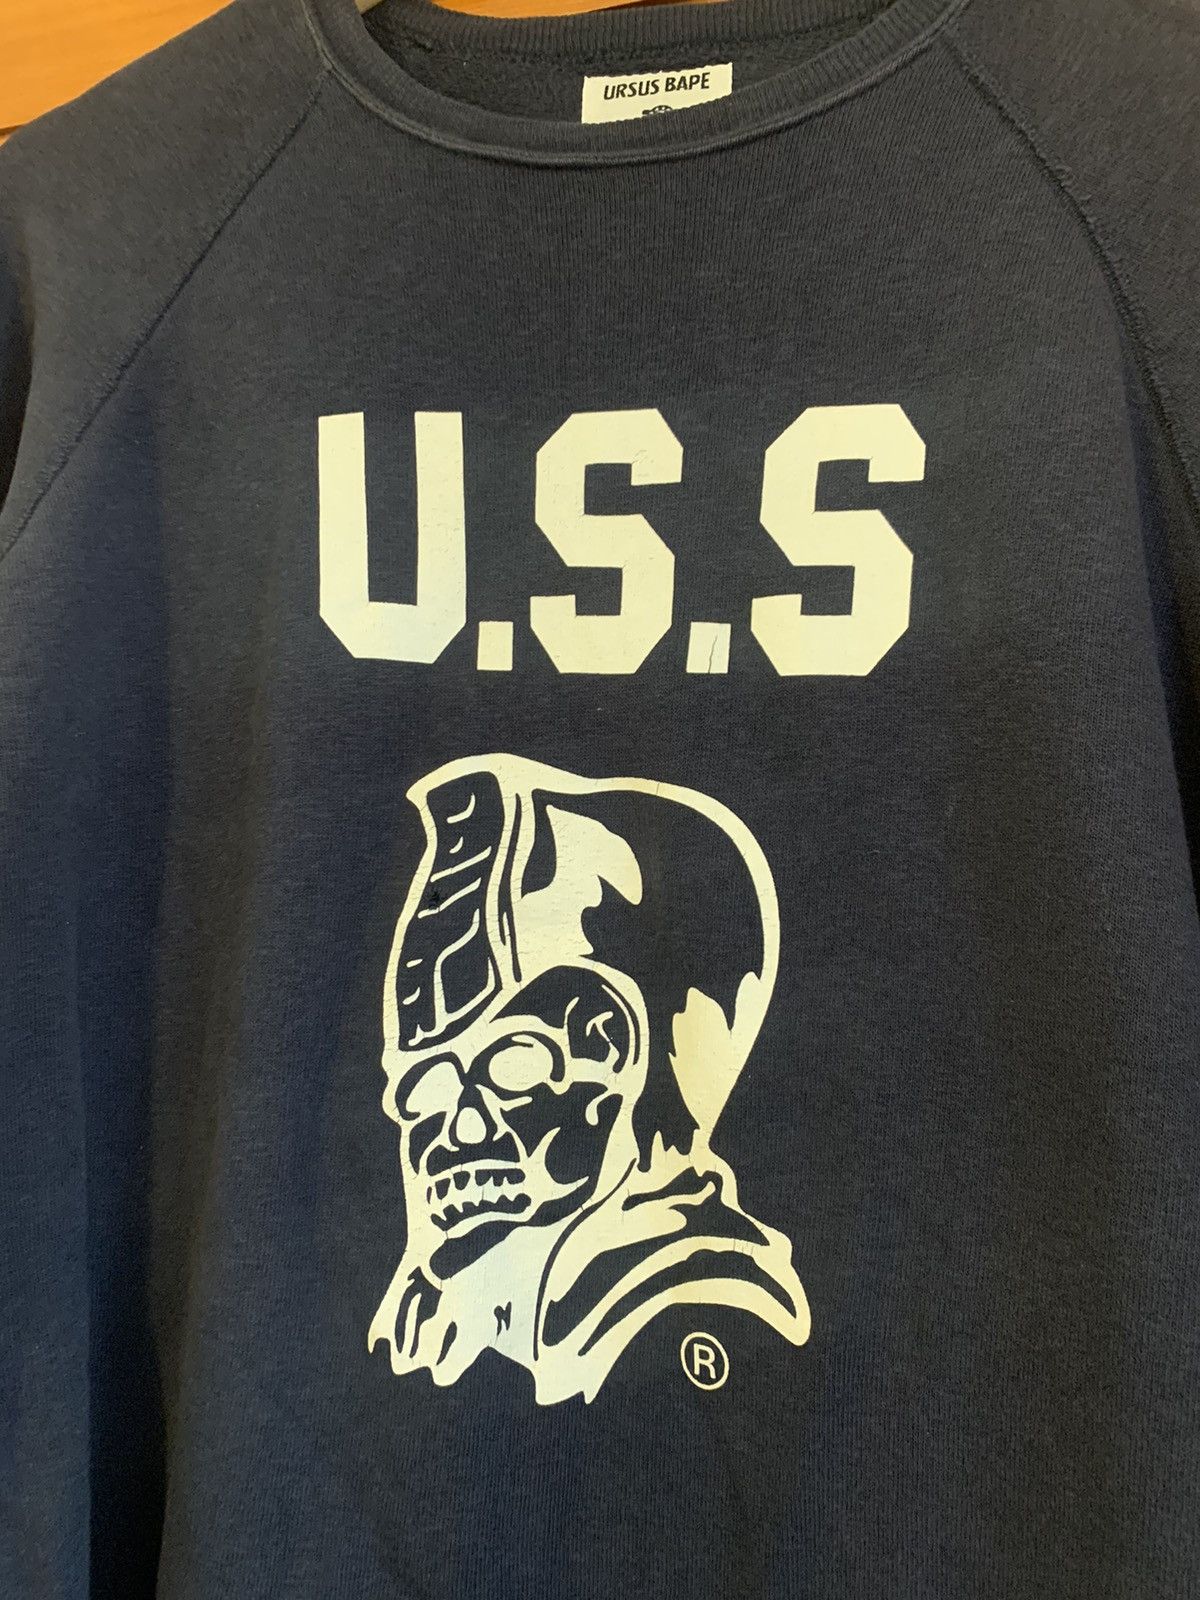 Bape Ursus Bape U.S.S Japanese Made Crewneck Sweatshirt -L Size US L / EU 52-54 / 3 - 3 Thumbnail